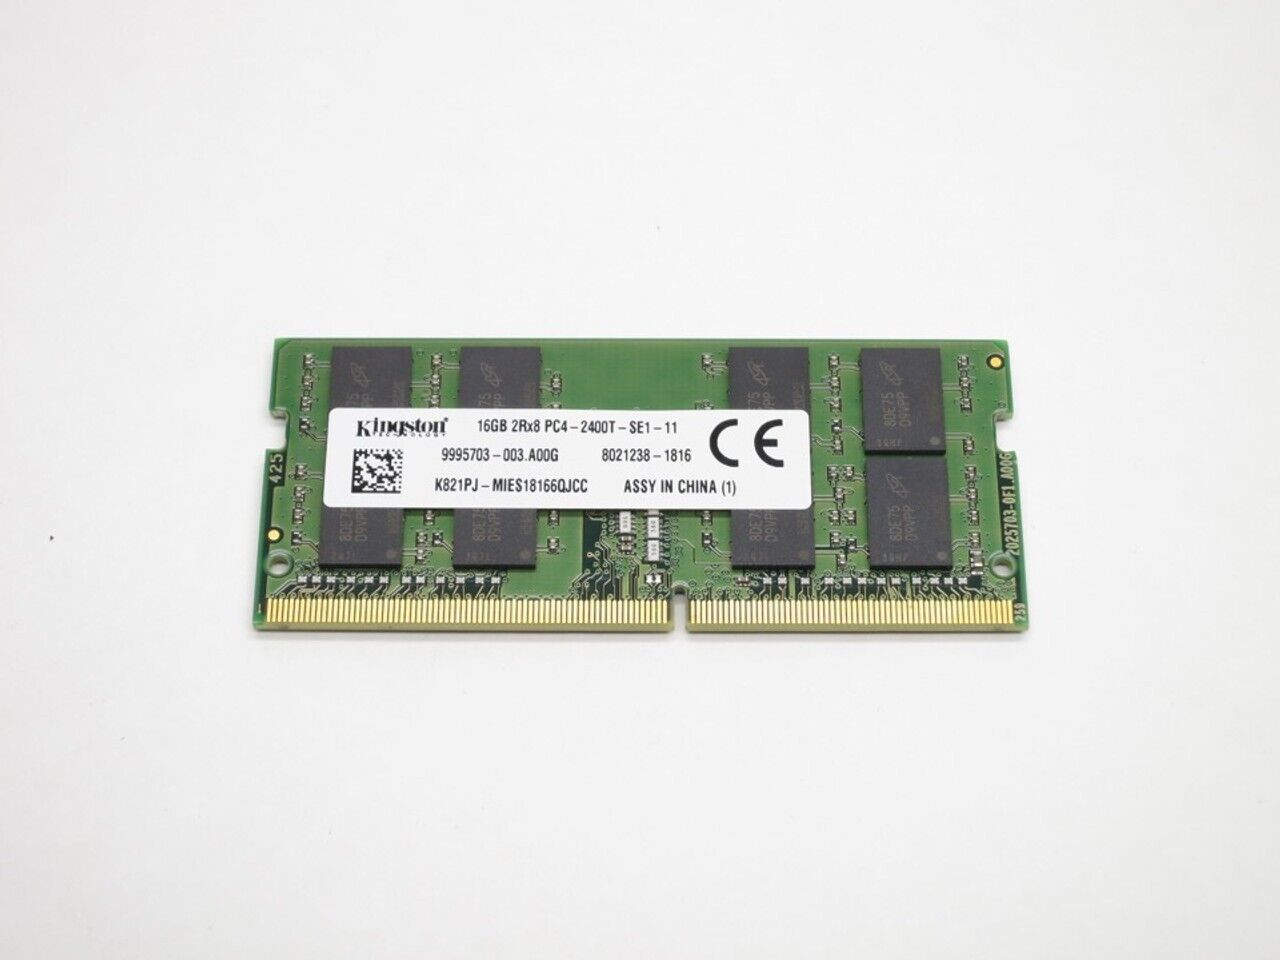 Kingston 16GB 2Rx8 PC4-2400T-SE1 SO-DIMM Laptop Memory K821PJ